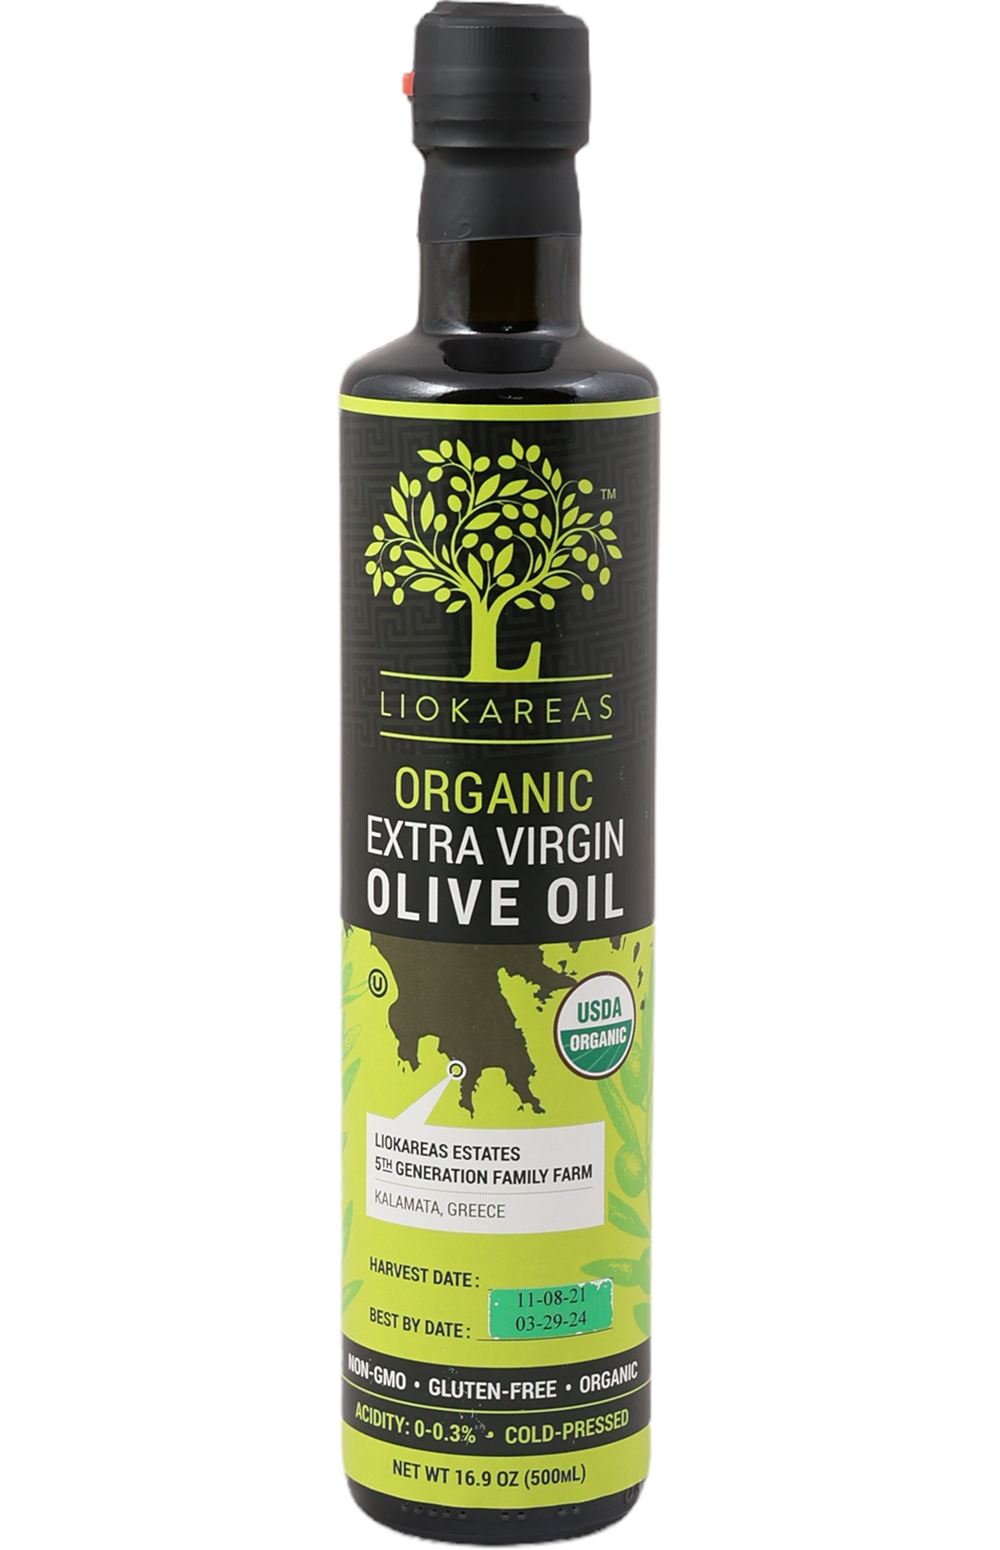 Liokareas Organic Olive Oil